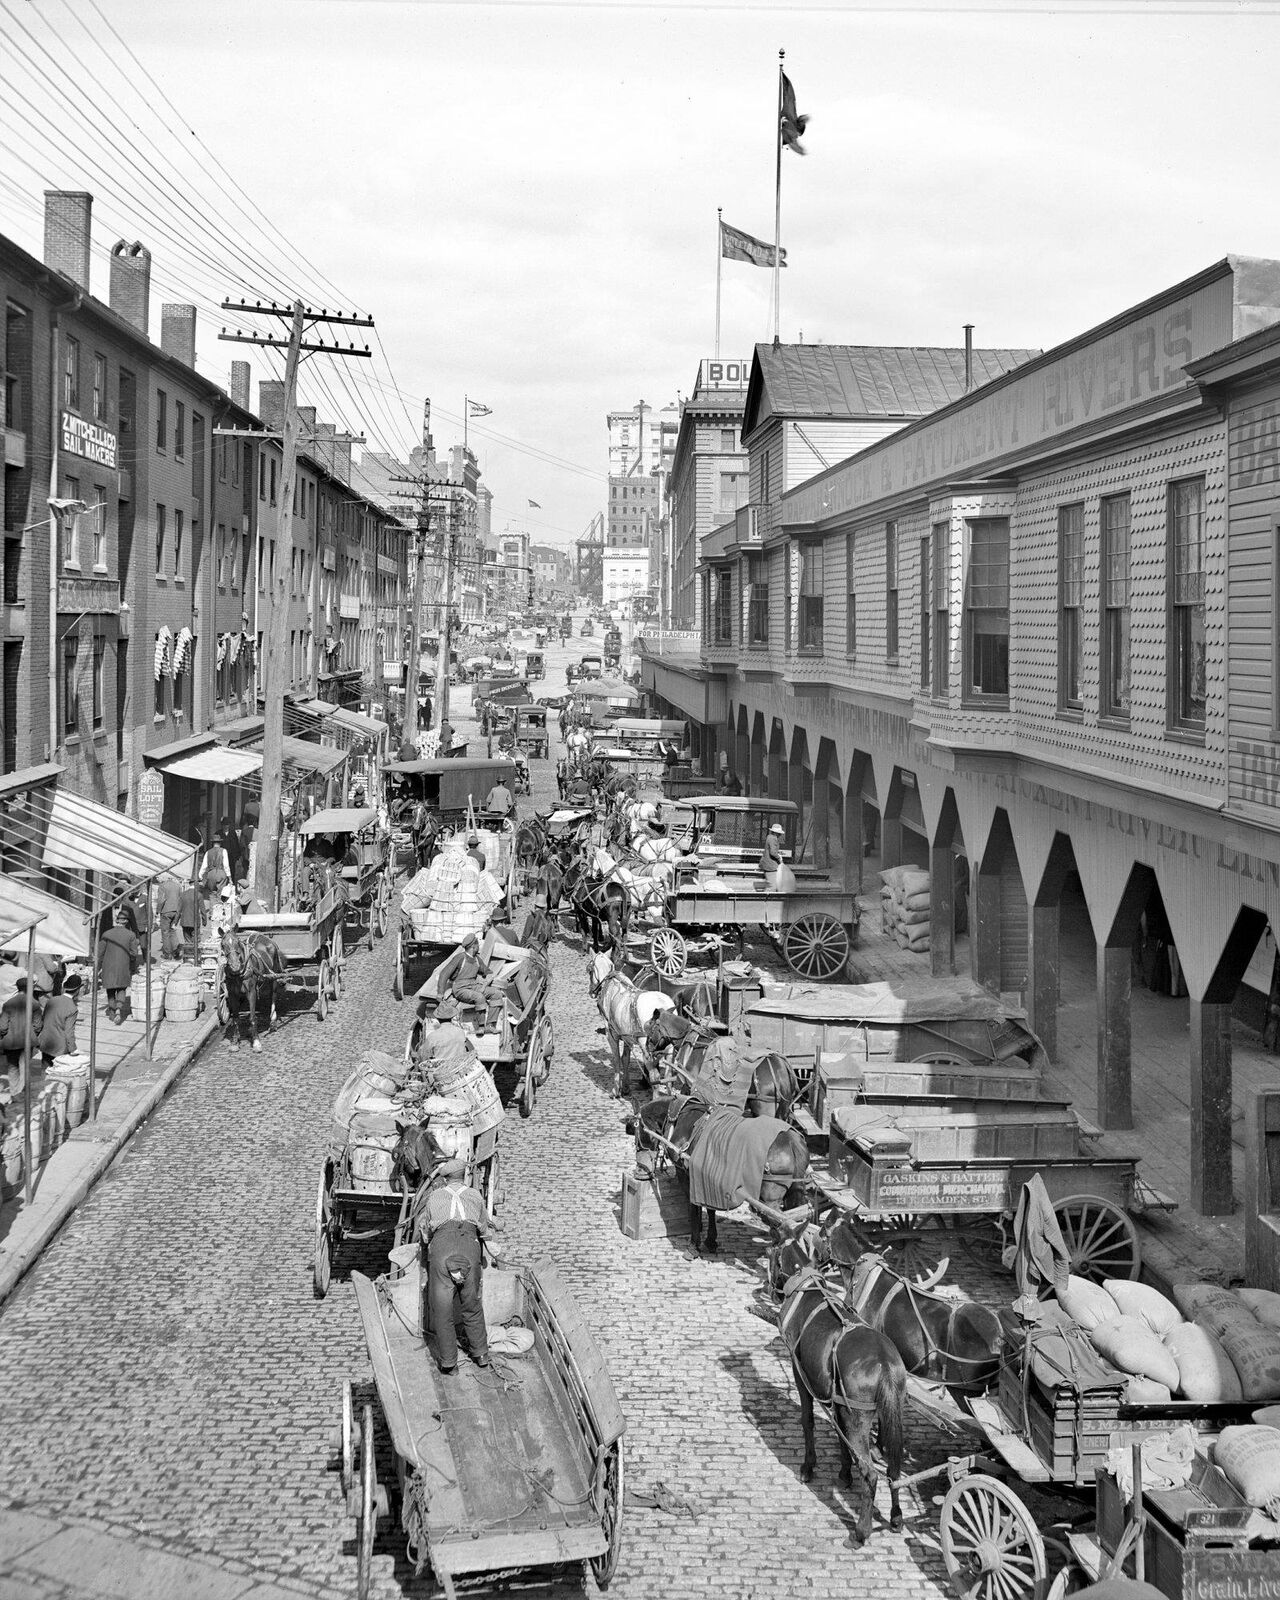 1906 BALTIMORE Light Street BUSY COMMERCE SCENE Photo  (187-a)